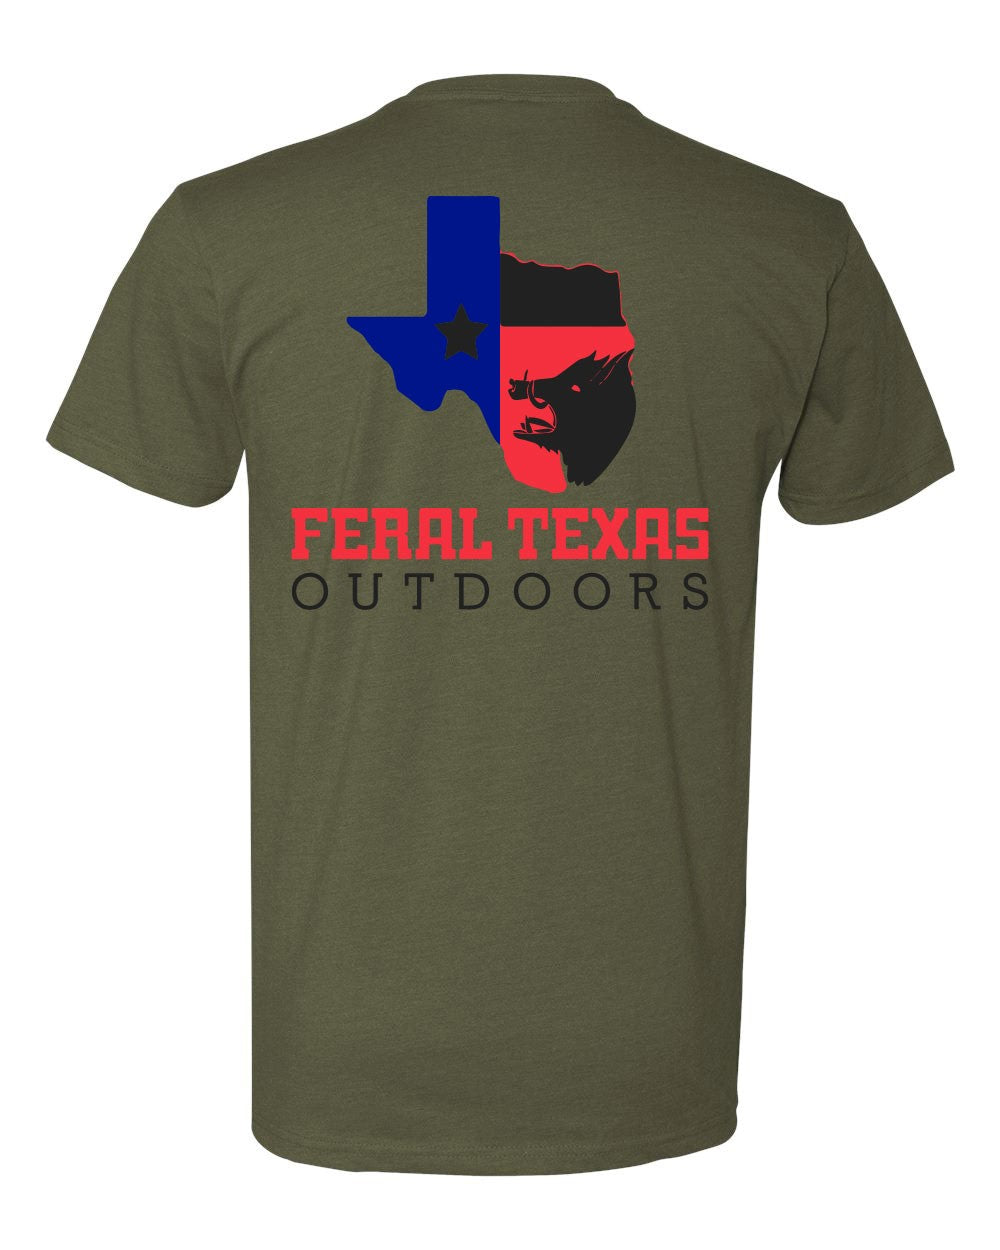 Feral Texas Outdoors Army Green T-Shirt